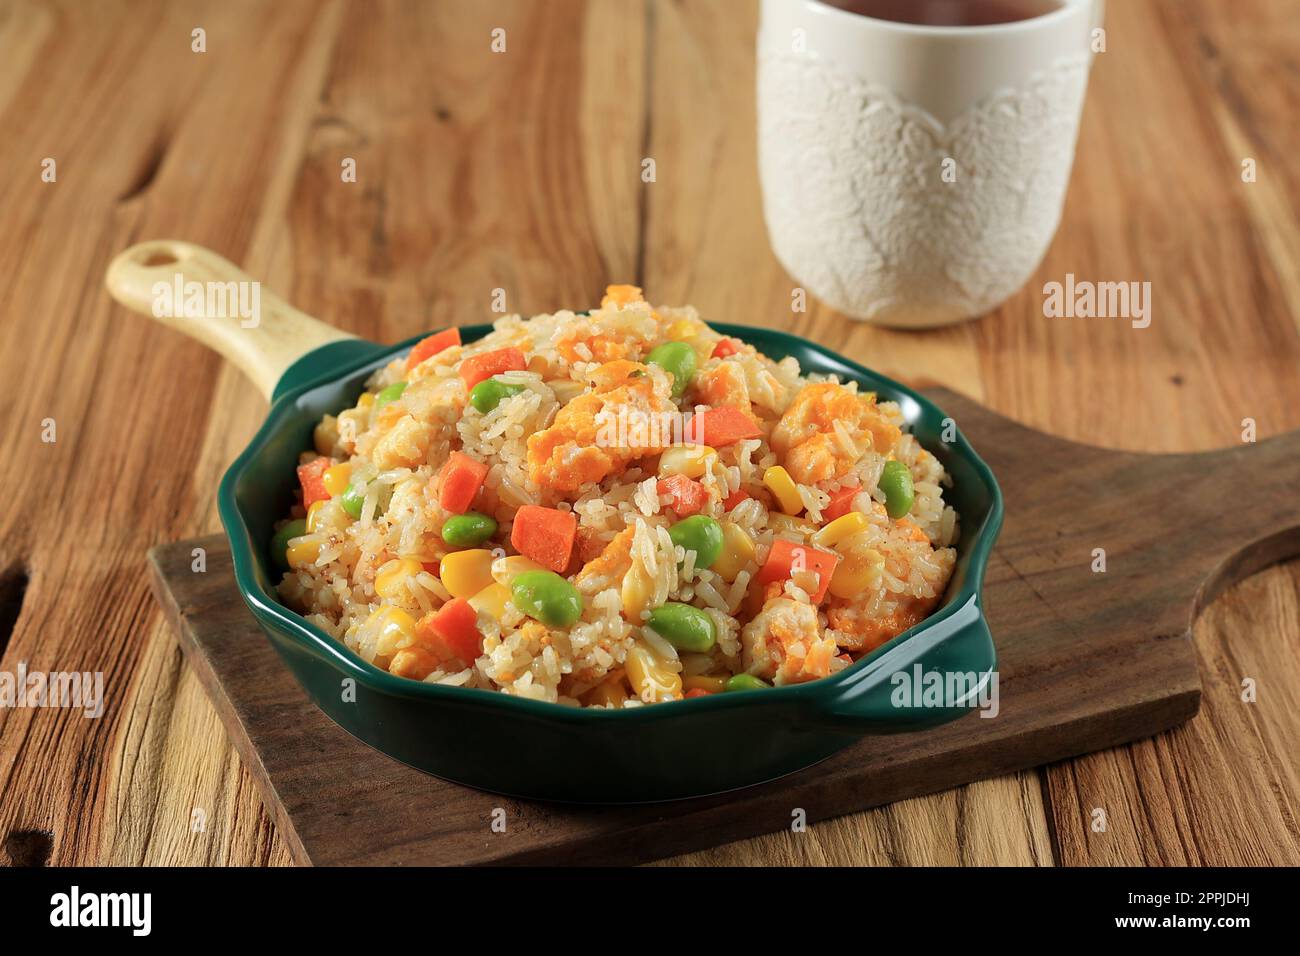 Yangzhou Fried Rice with Egg, Carrot, Sweet Corn, Edamame.  Authentic Asia Chinese China Food uisine. Stock Photo